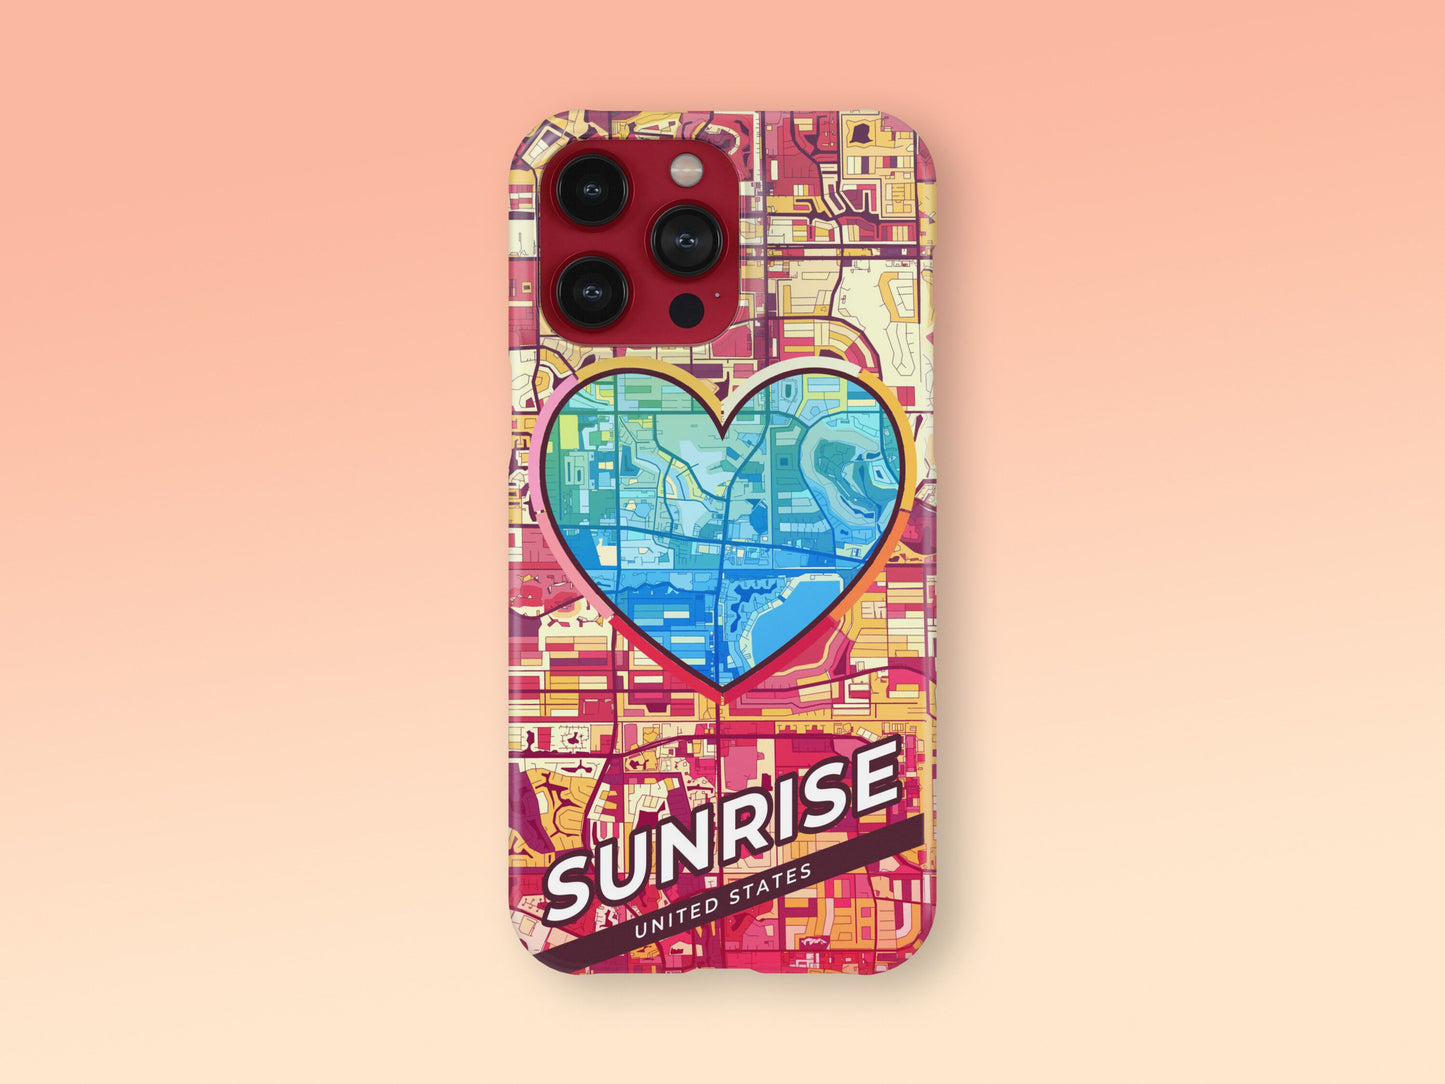 Sunrise Florida slim phone case with colorful icon 2